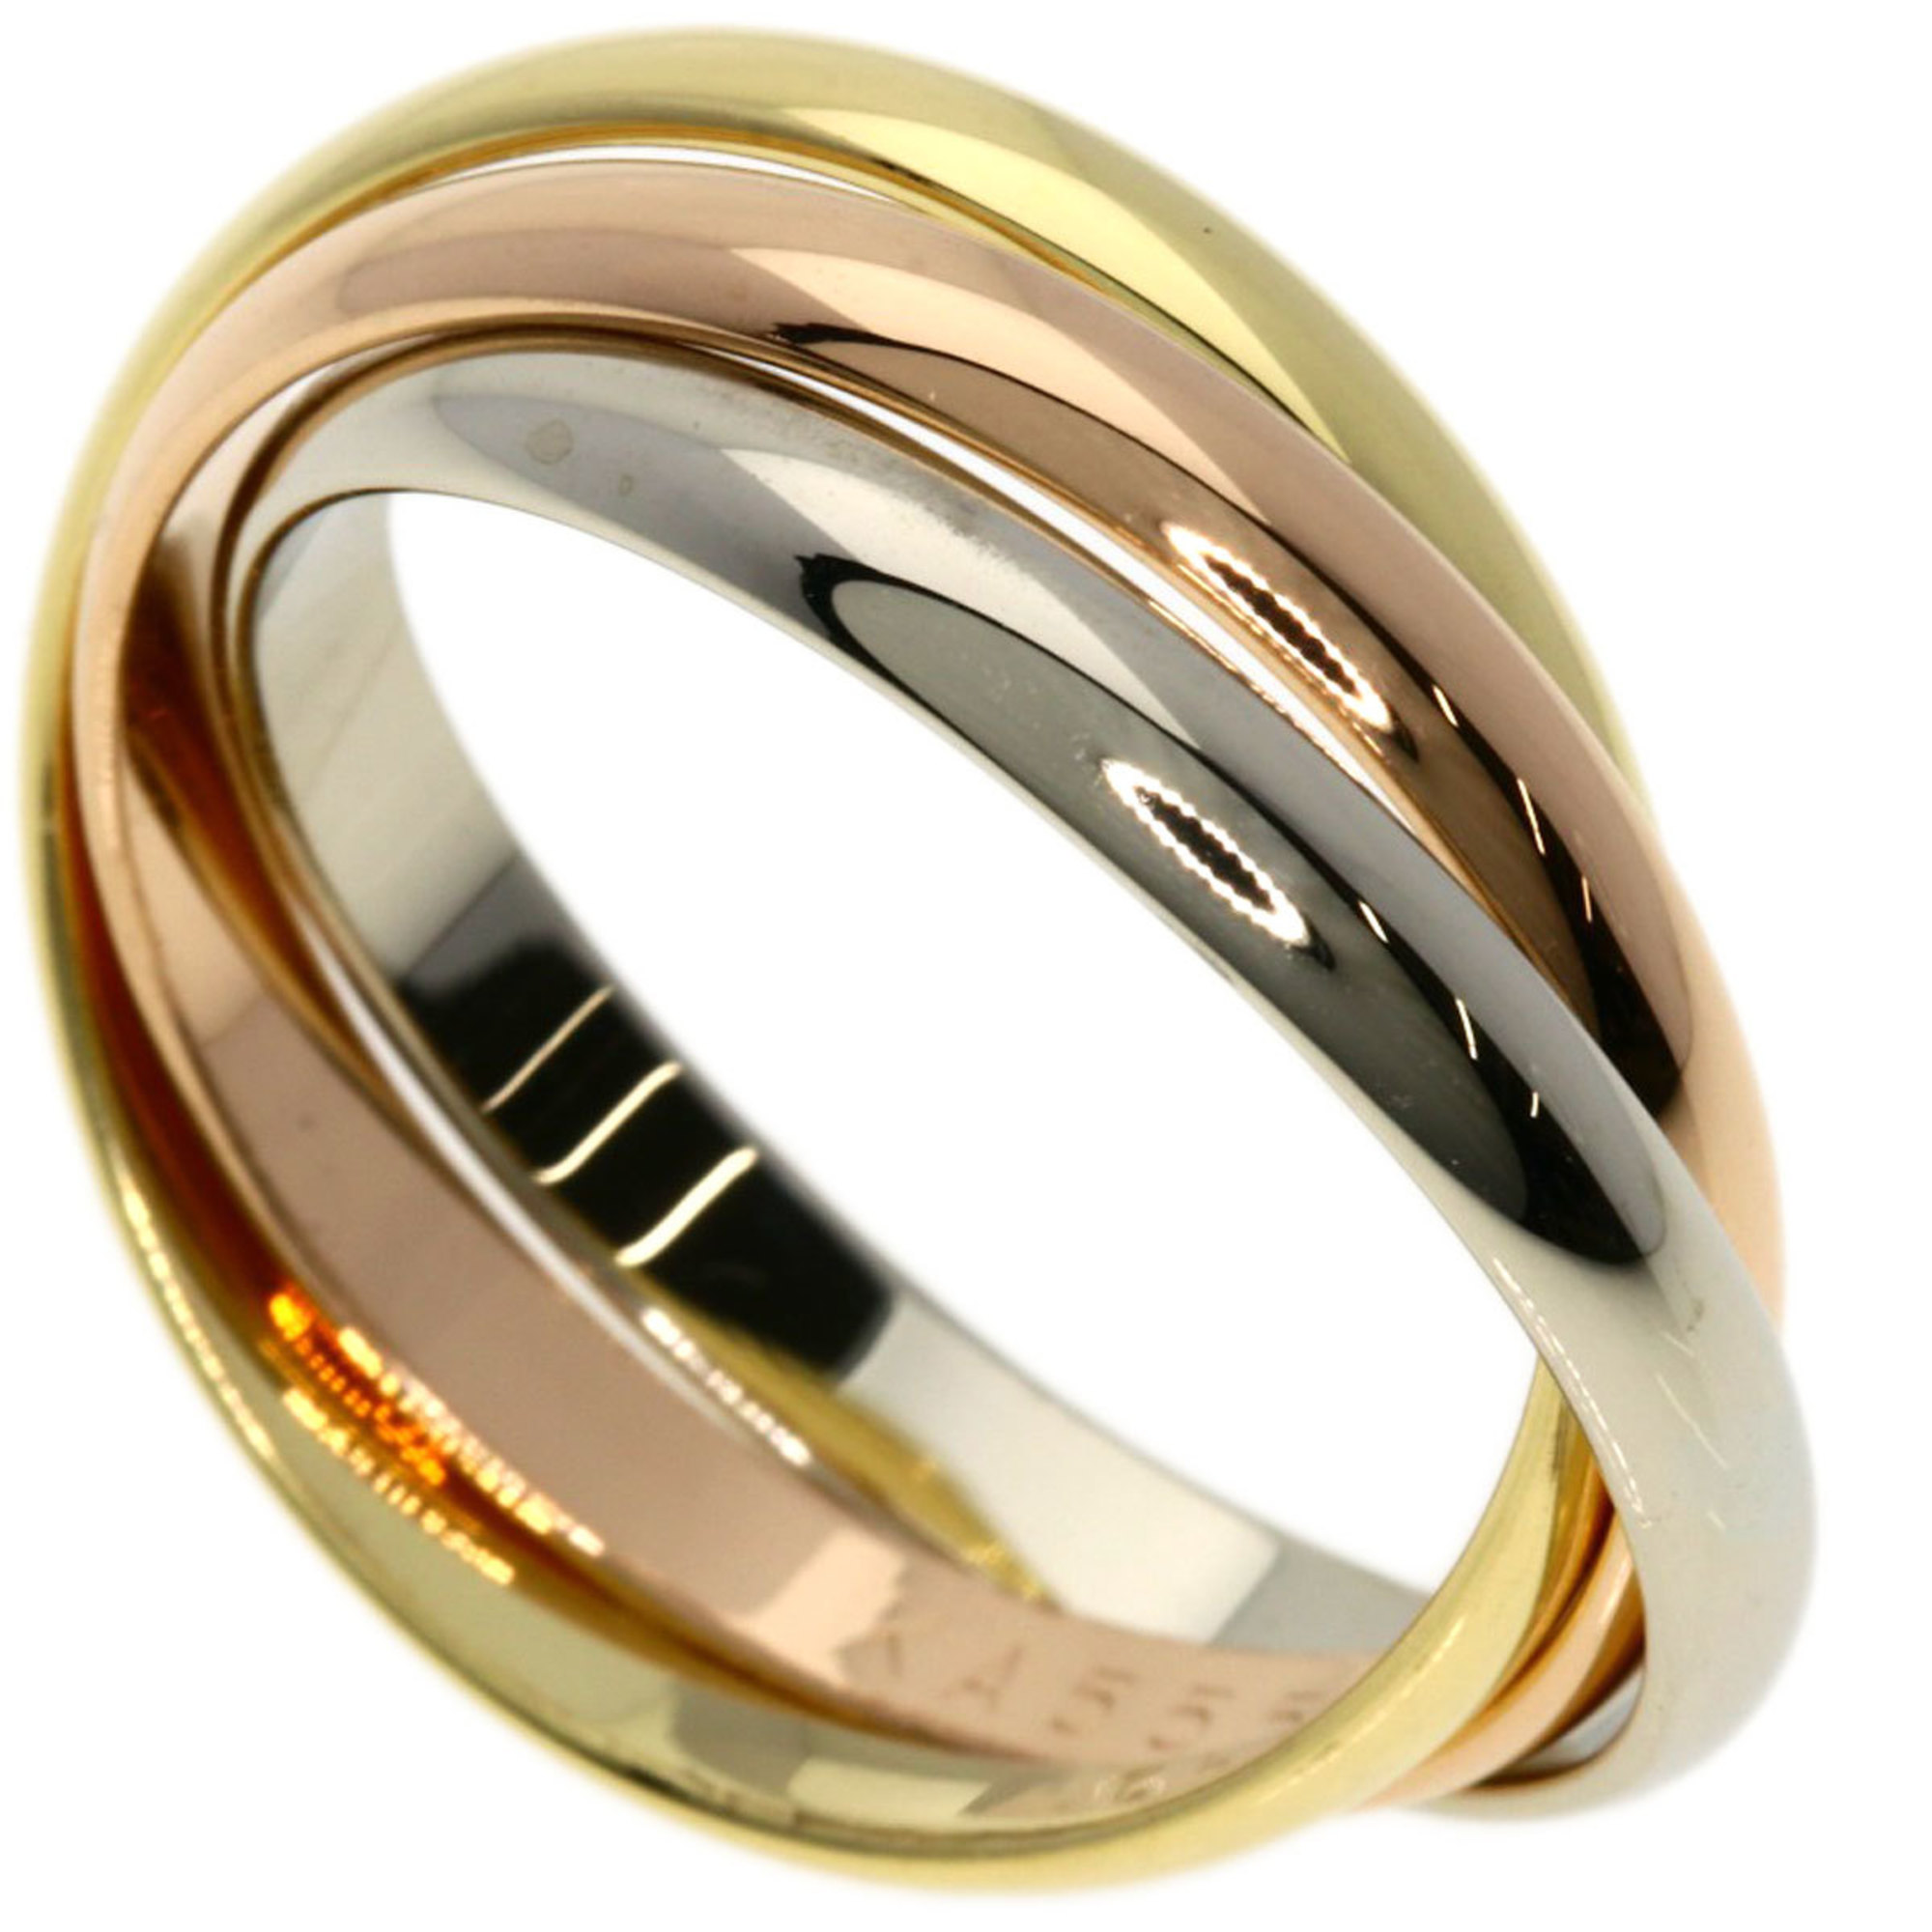 Cartier Trinity SM #52 Ring, K18 Yellow Gold, K18WG, K18PG, Women's